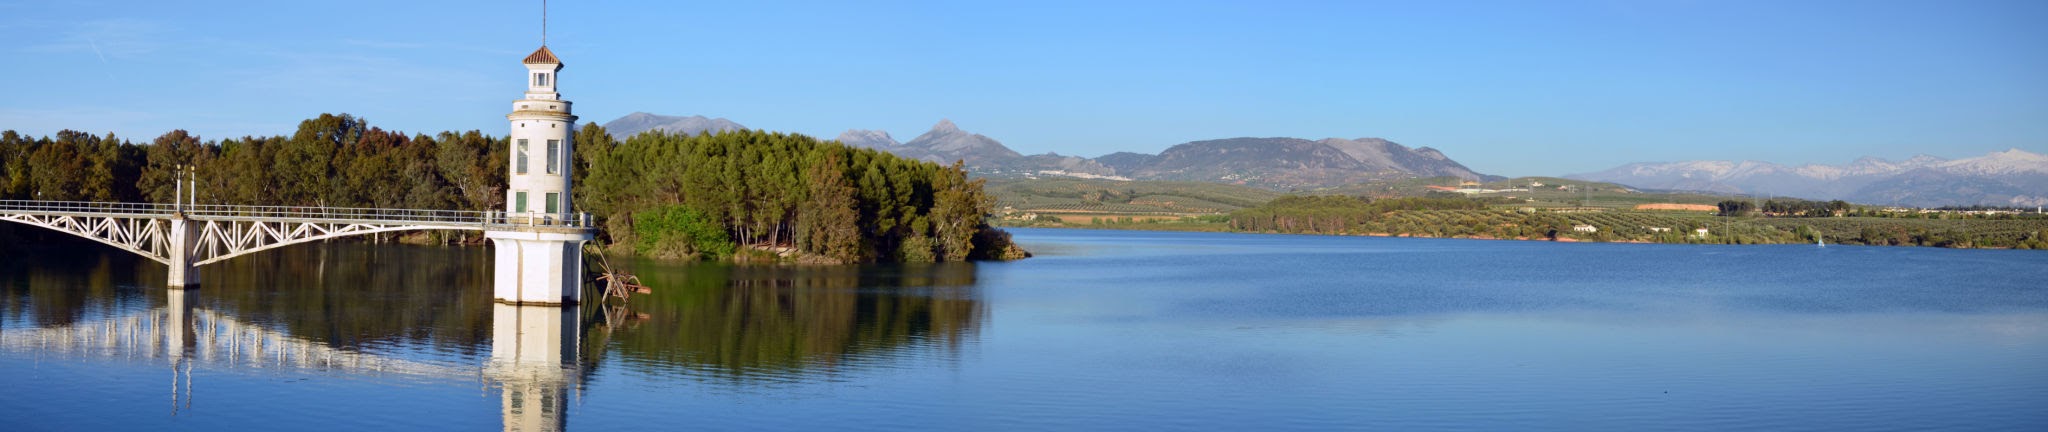 Cubillas Reservoir, Atarfe